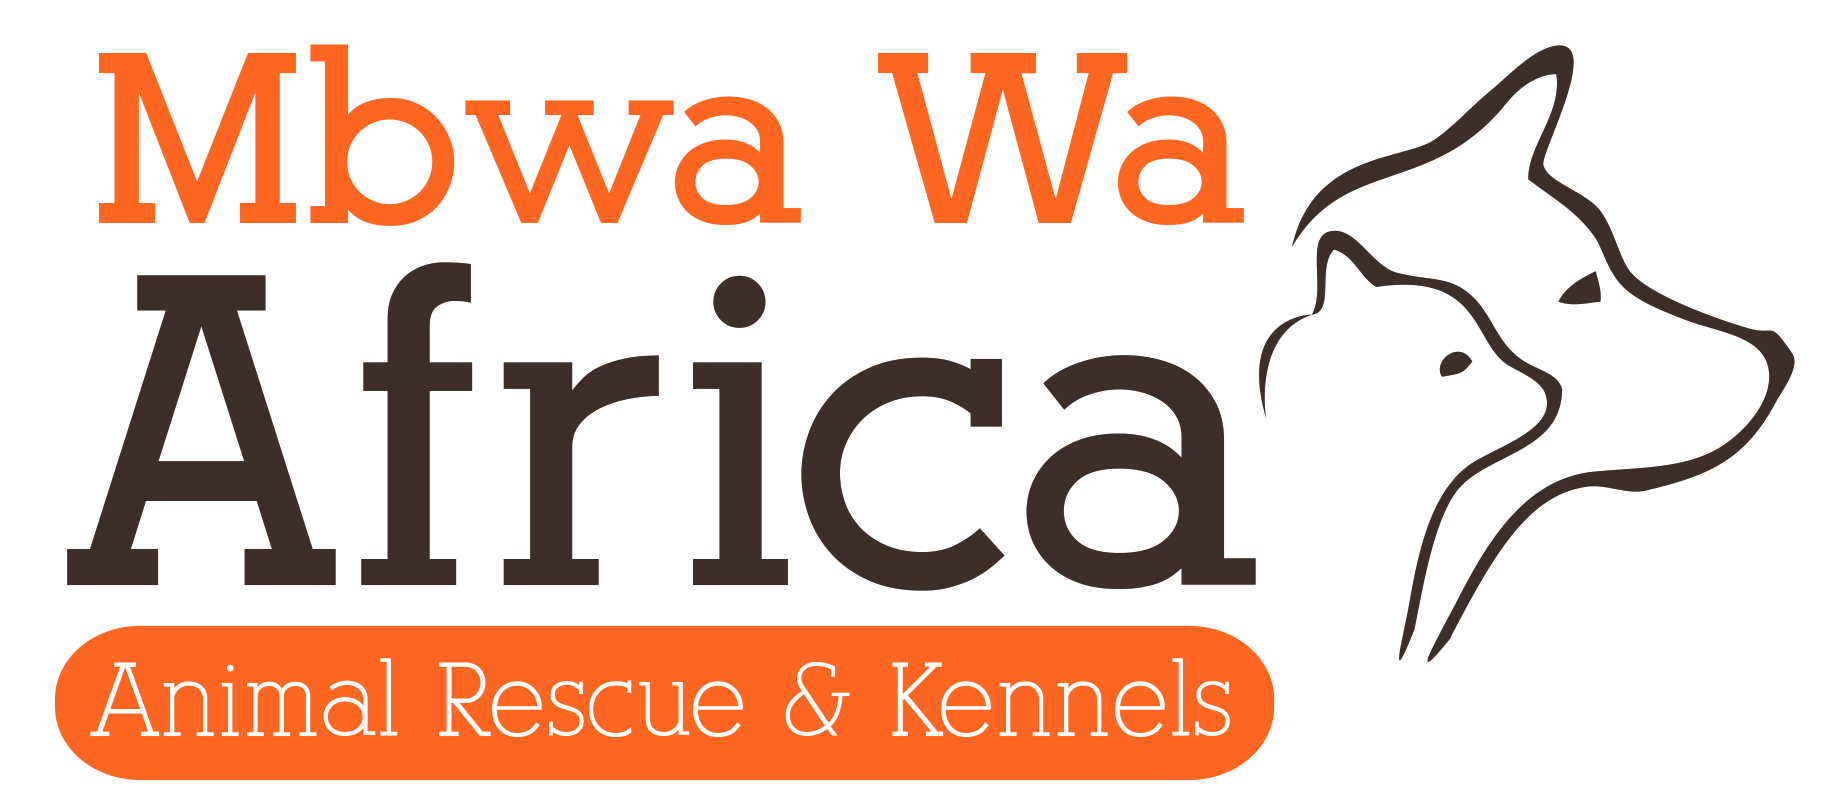 Mbwa Wa Africa Animal Rescue